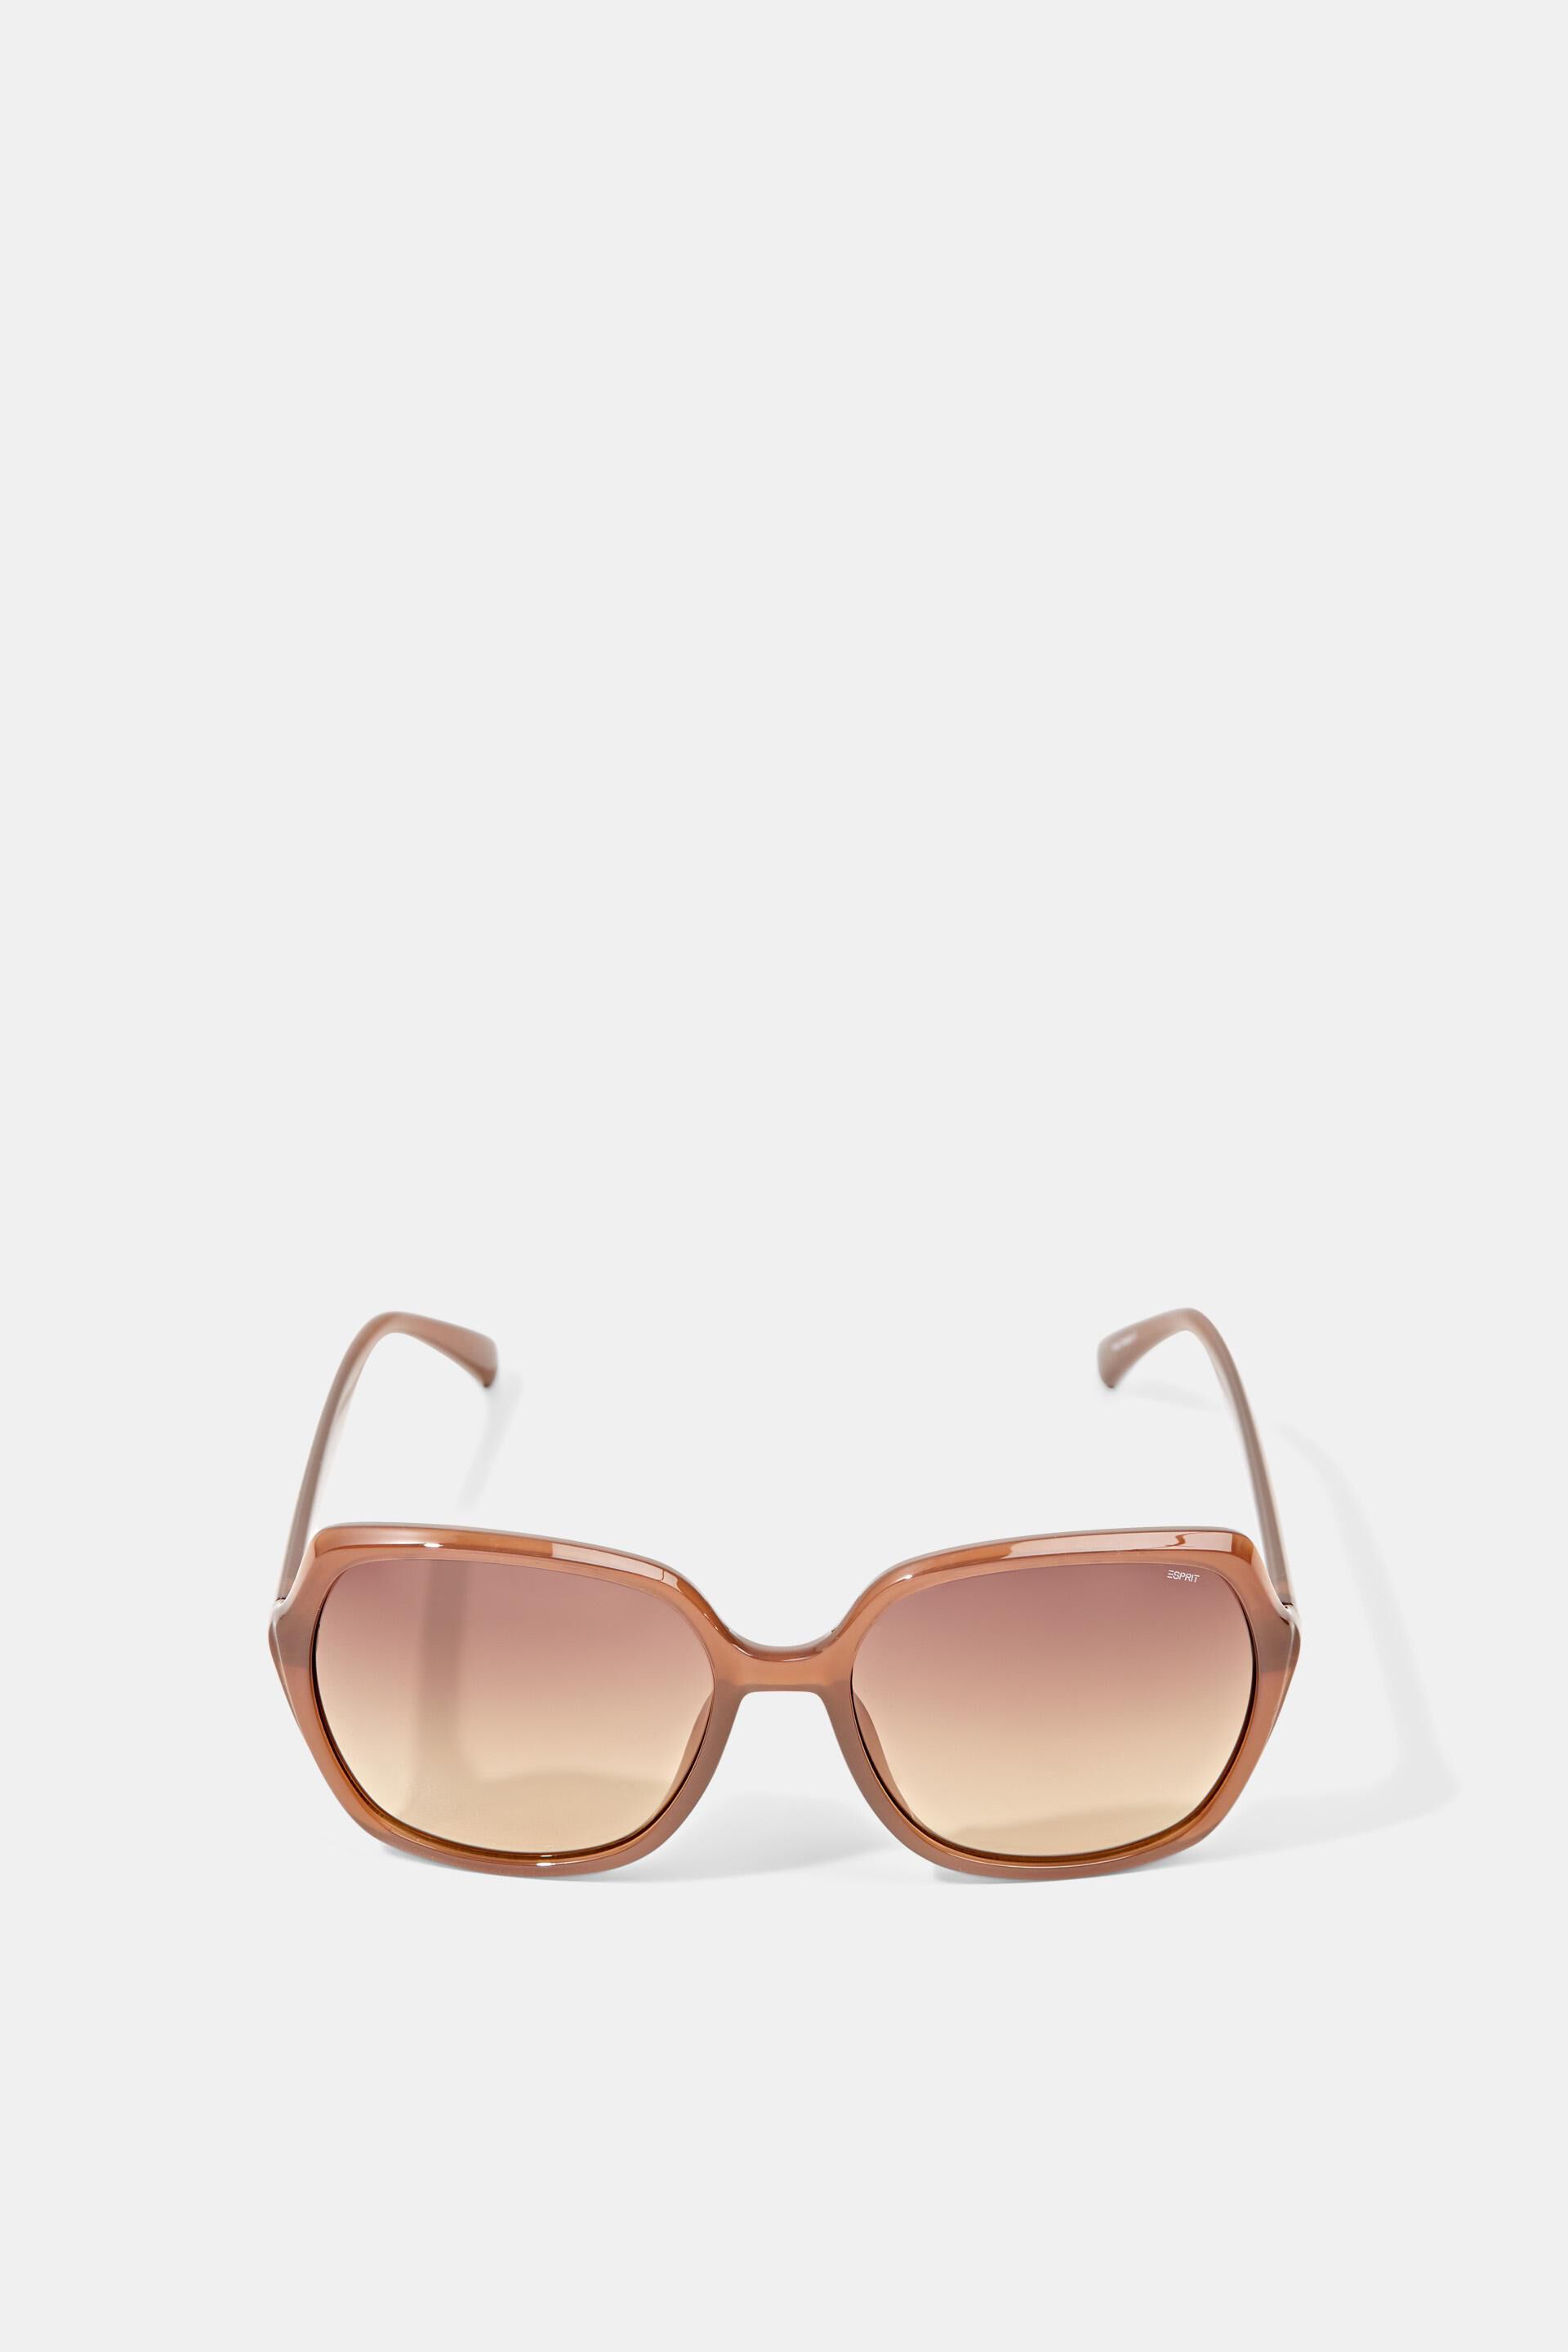 Esprit with sunglasses Statement lenses large